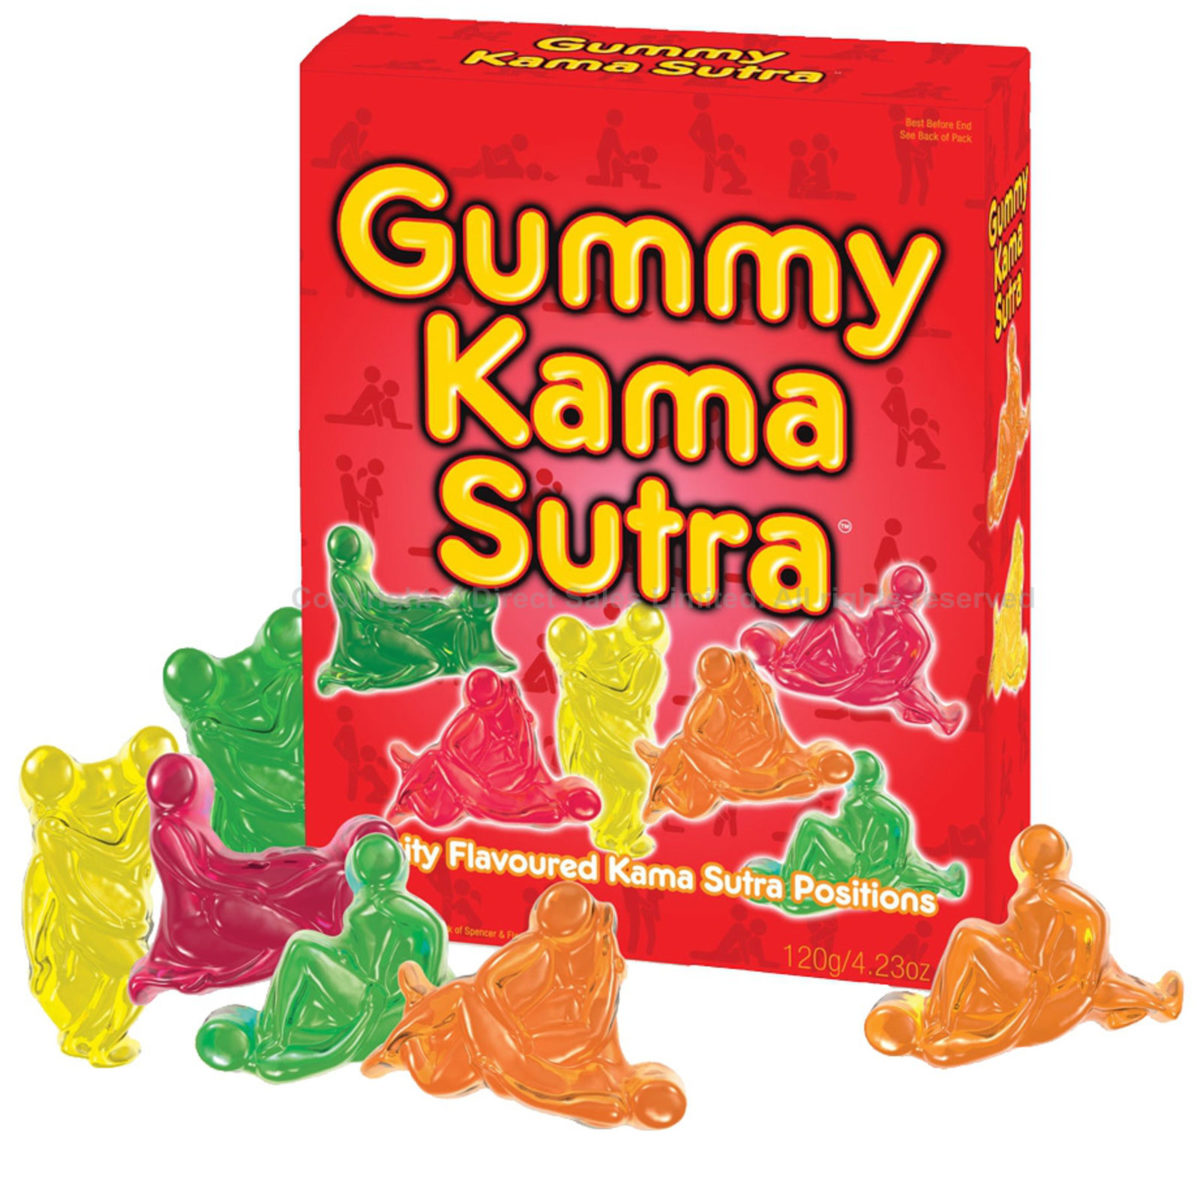 Kama sutra sweets